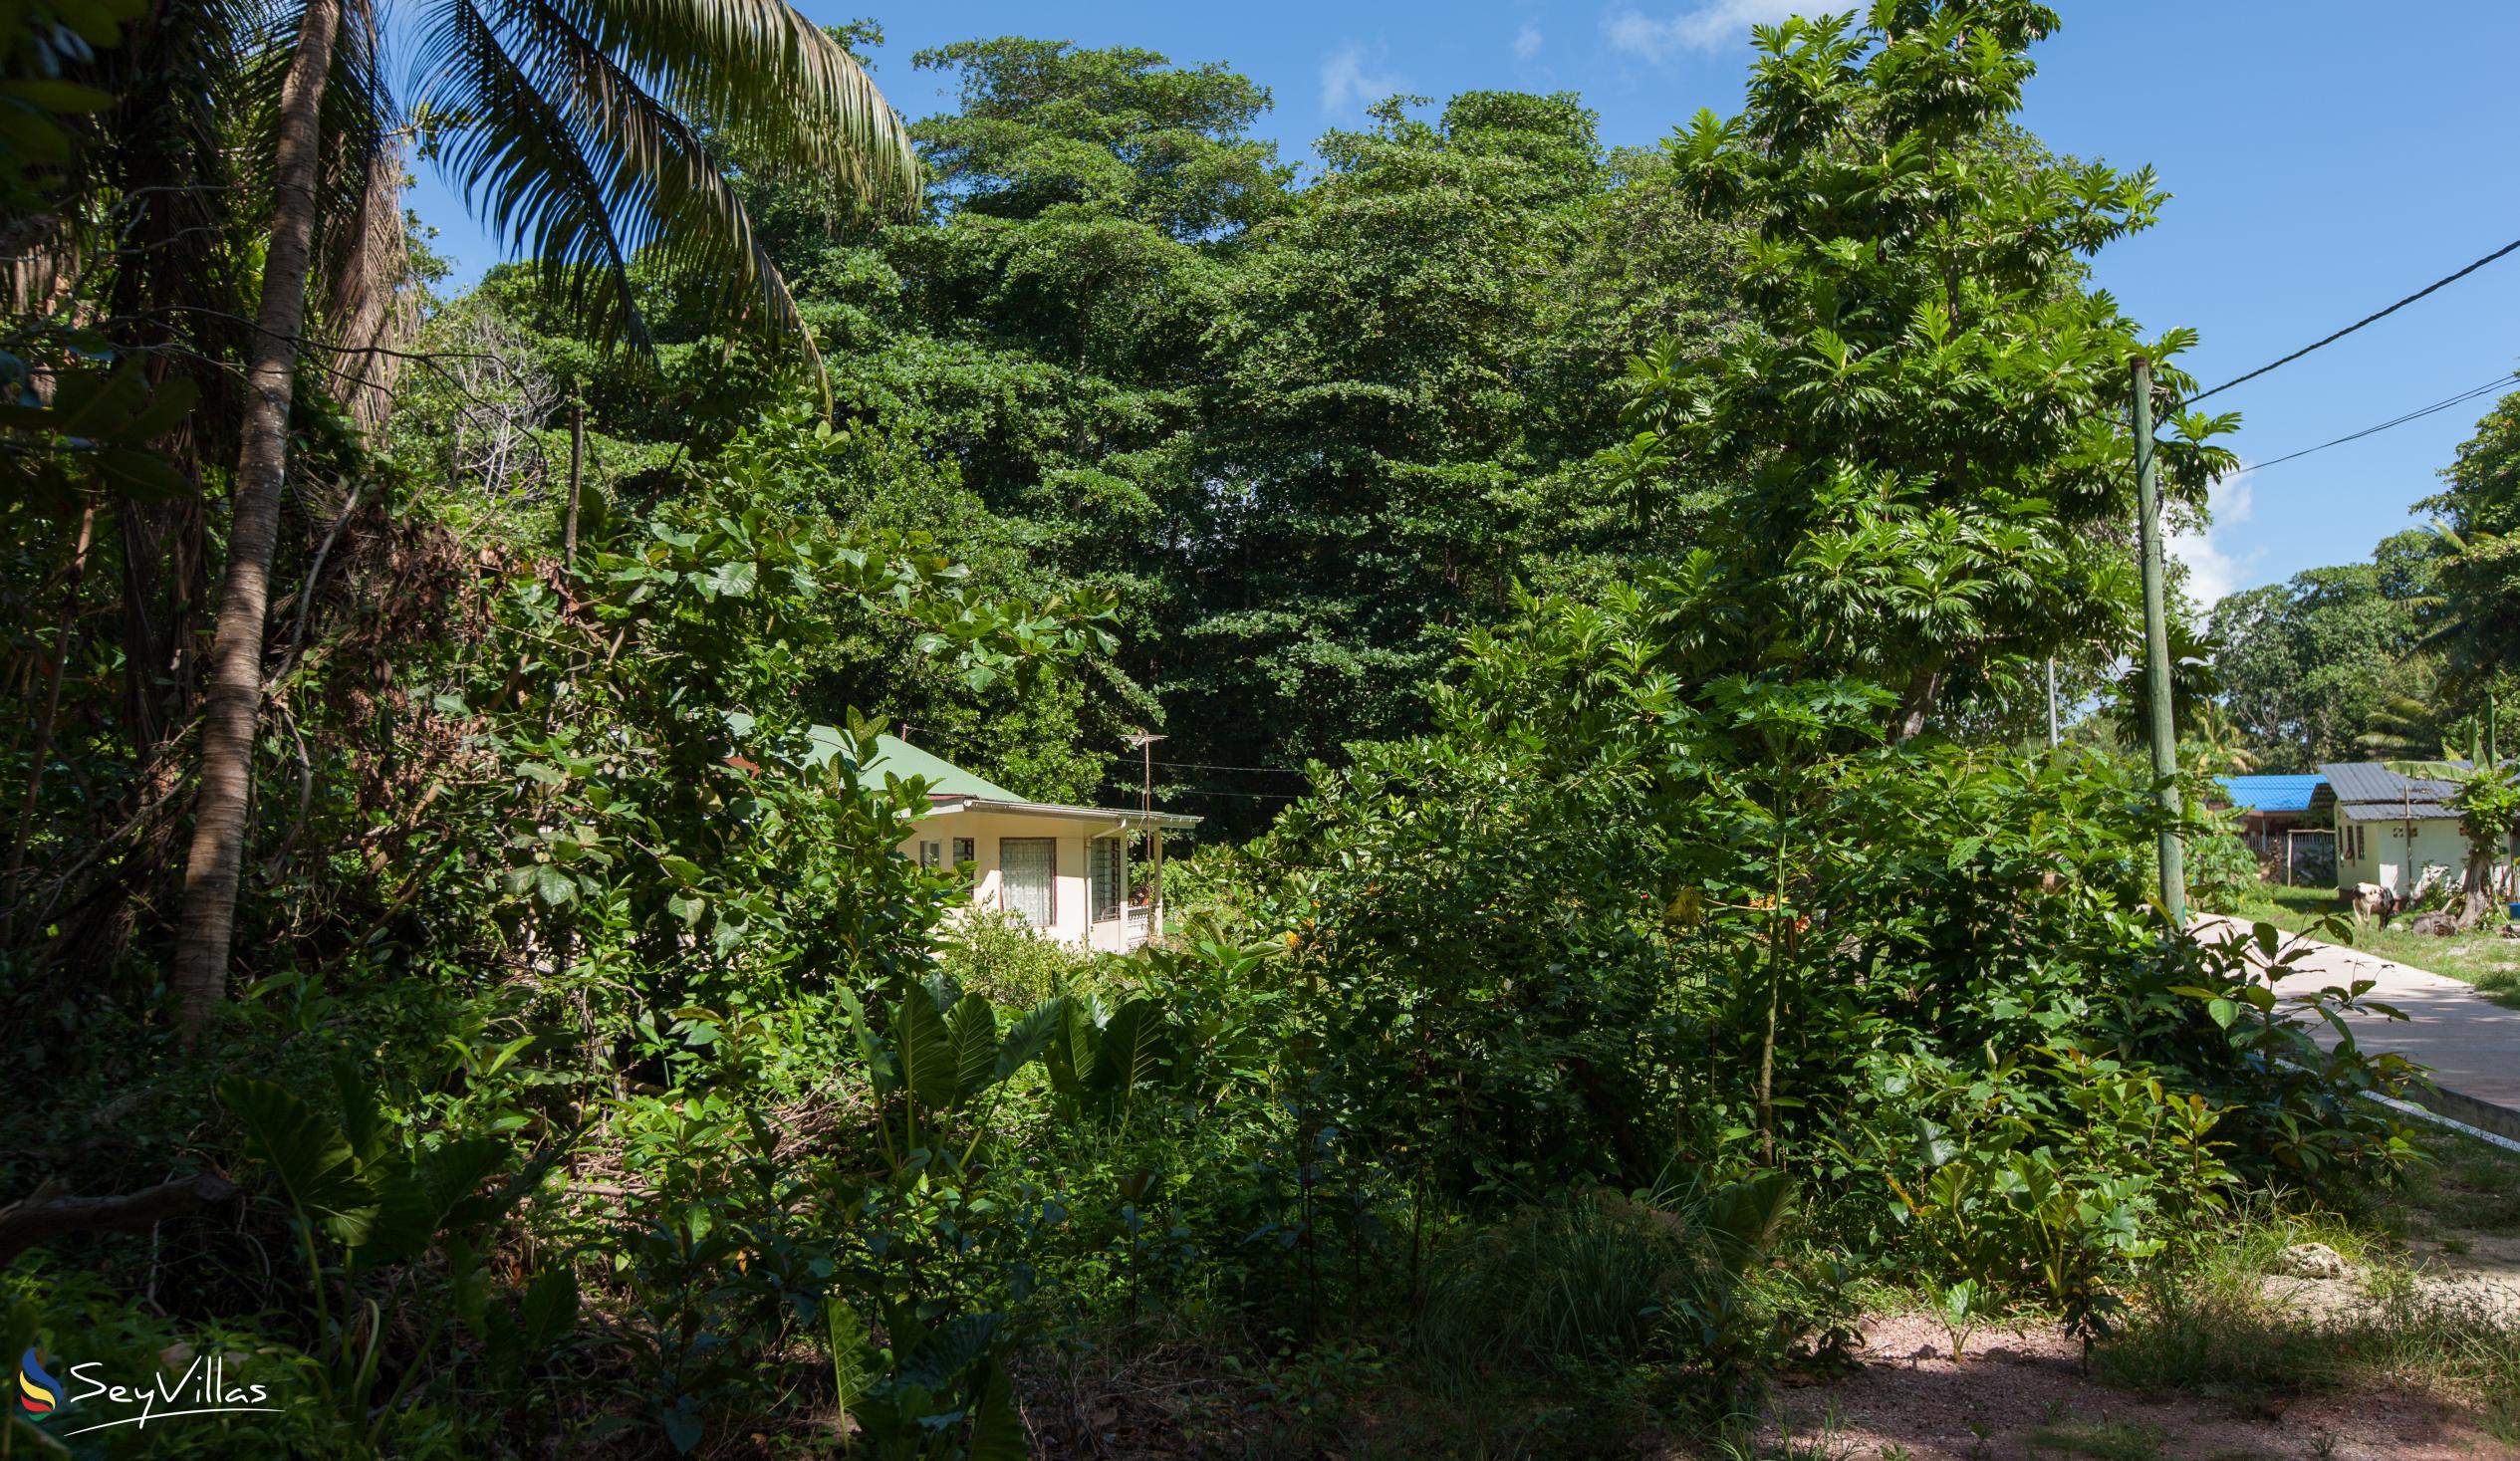 Foto 56: Tannette's Villa - Location - La Digue (Seychelles)